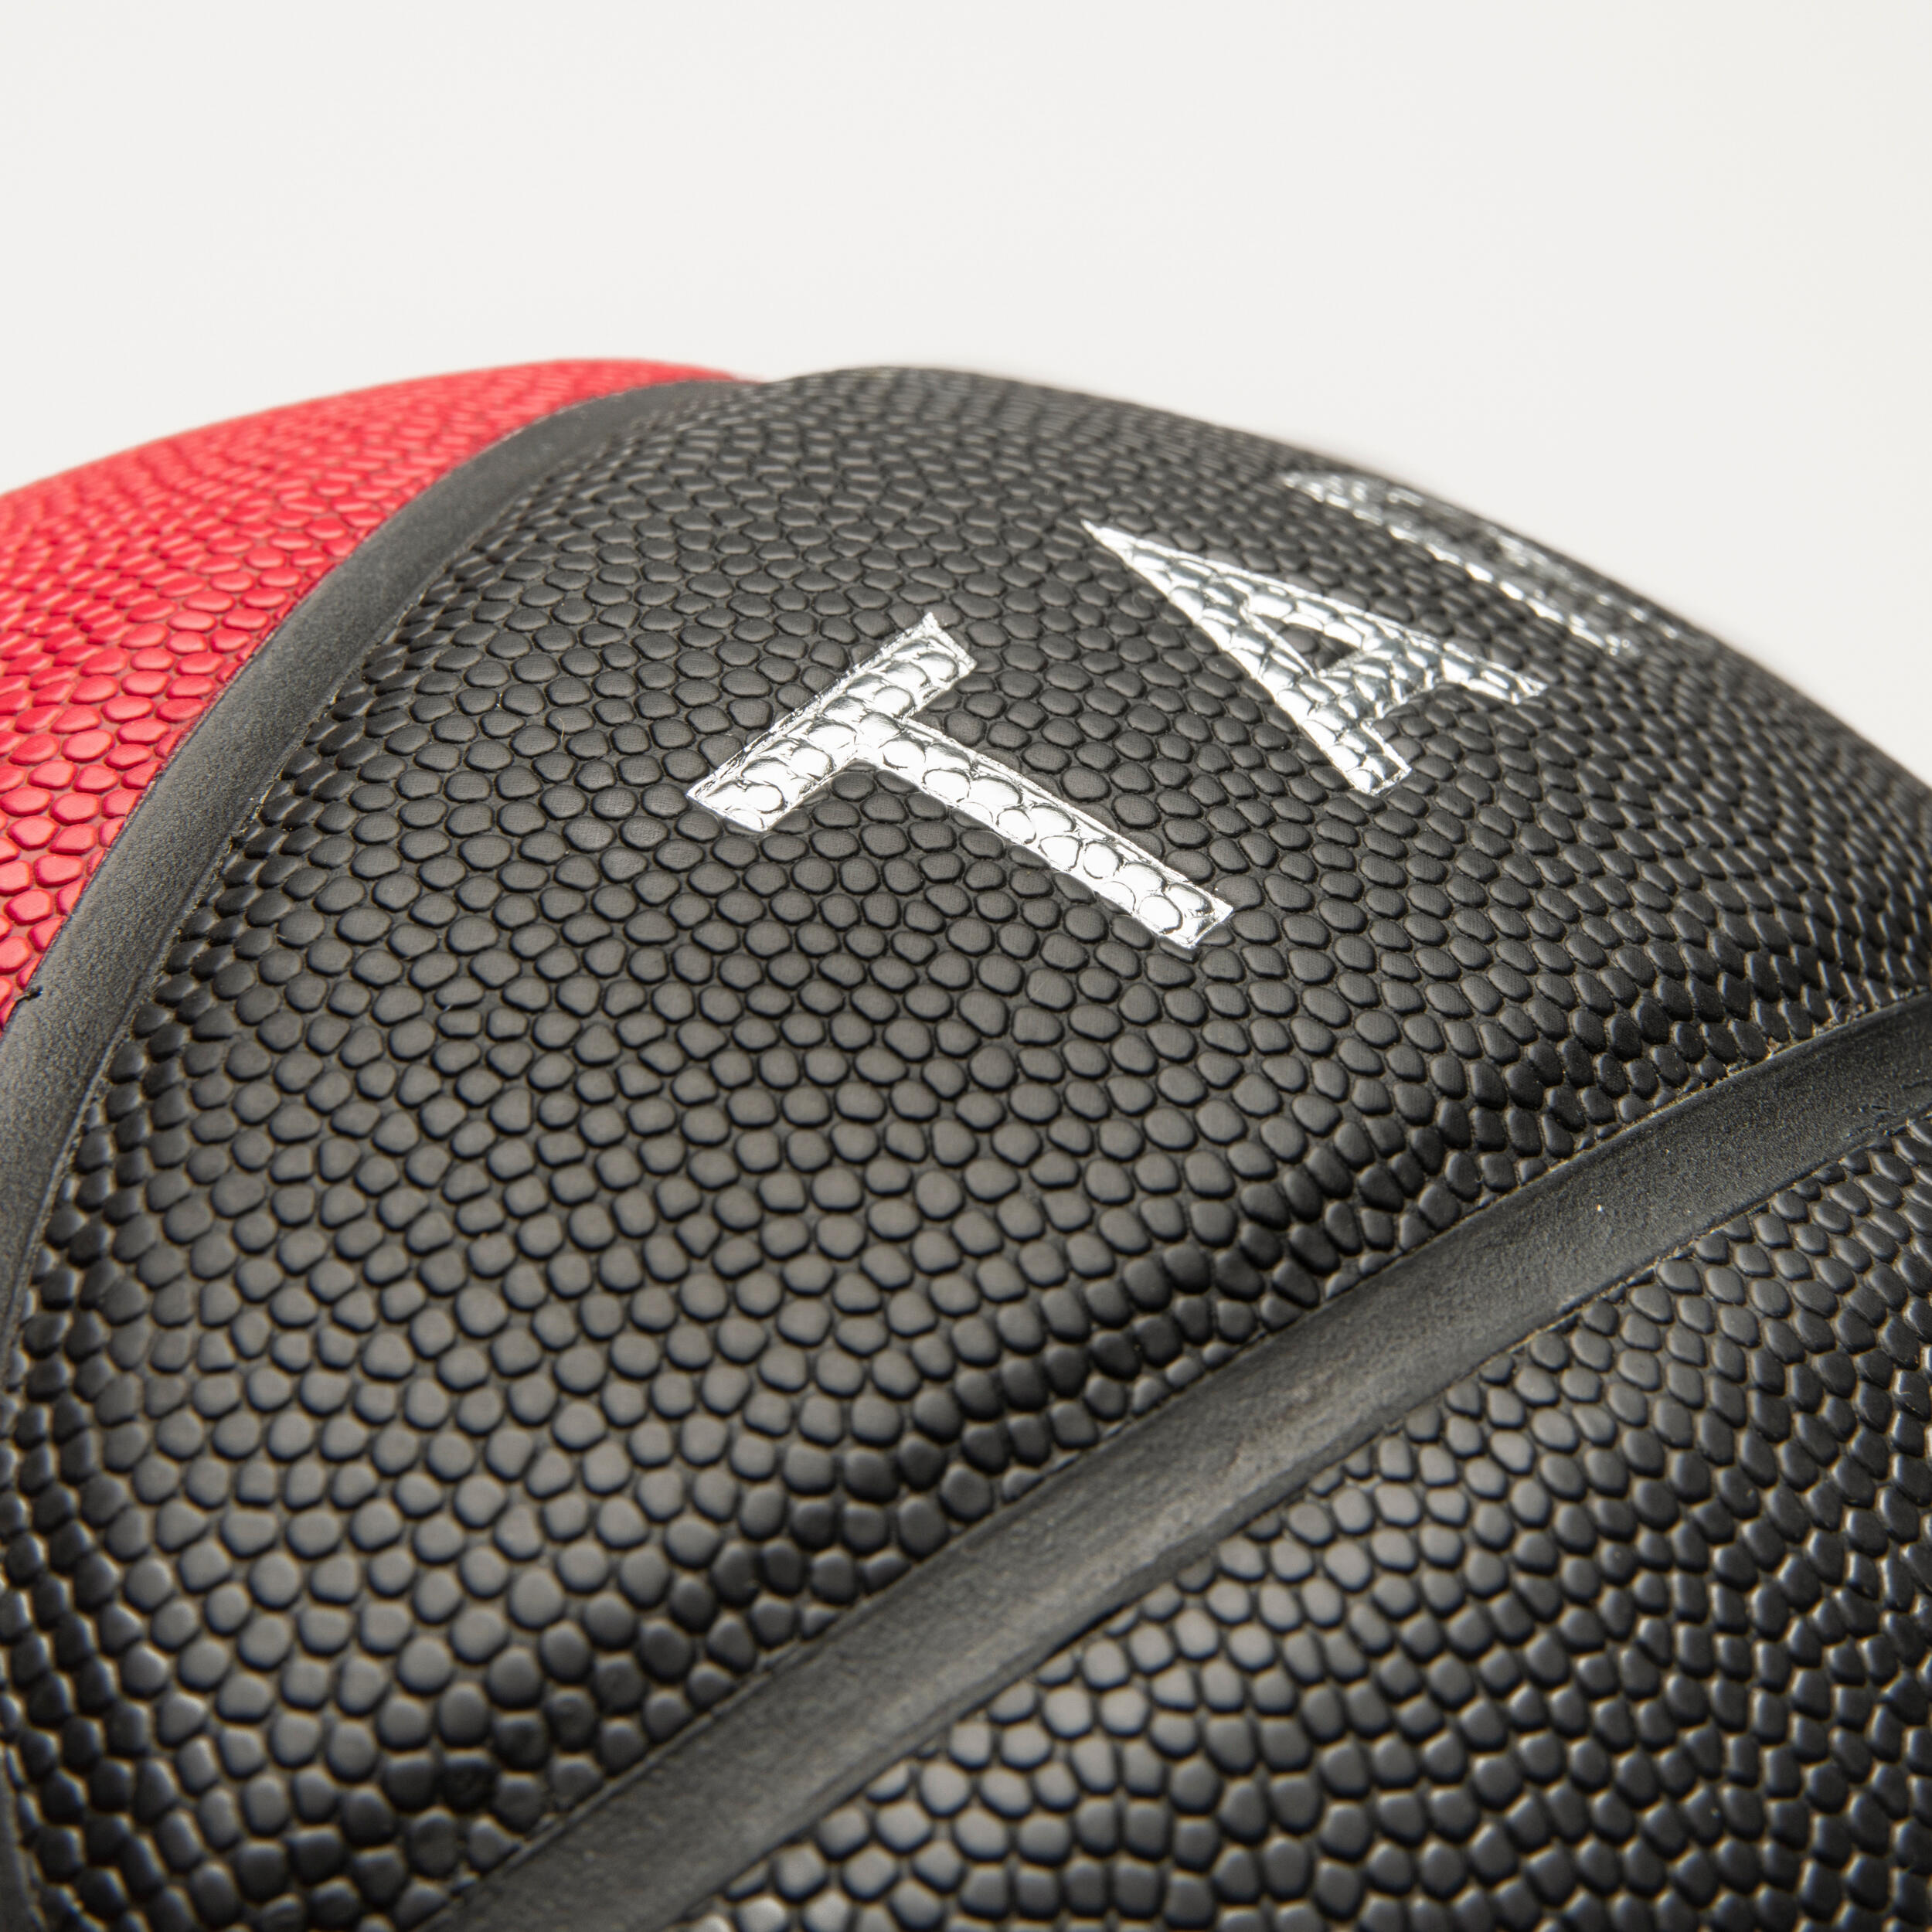 Size 7 Basketball Ball - BT 500 - black, Red - Tarmak - Decathlon